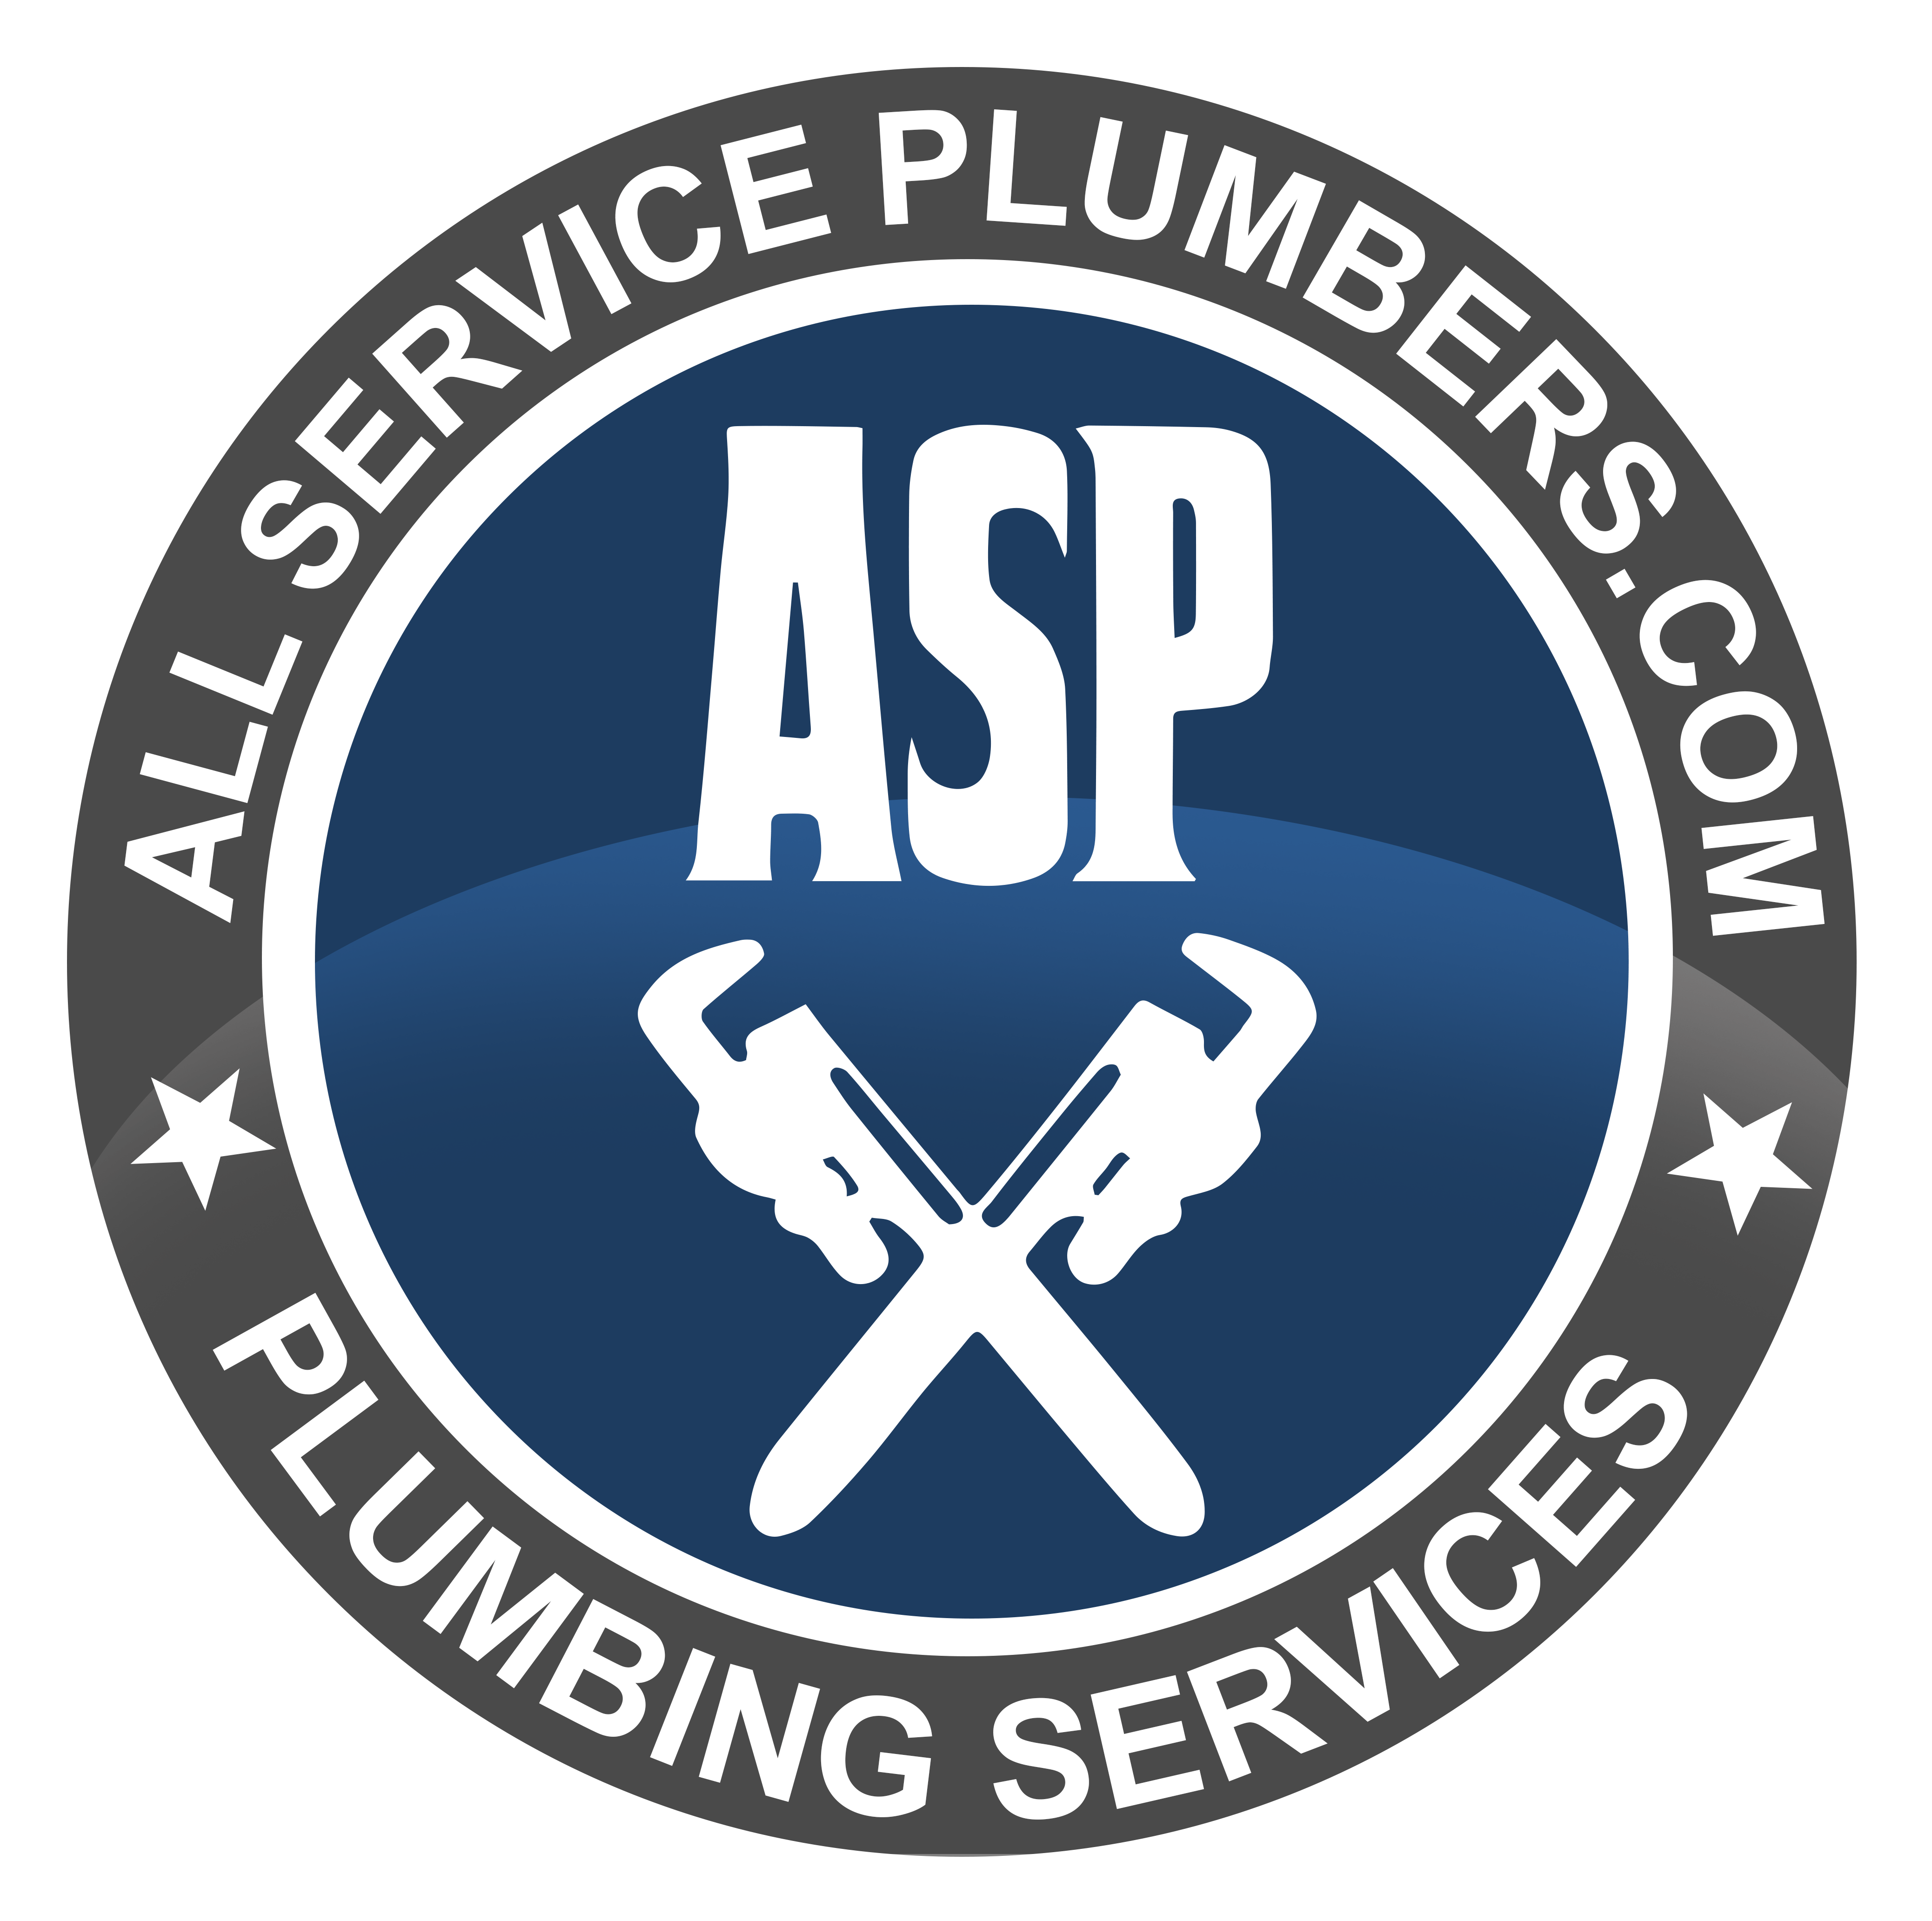 All Service Plumbing Logo